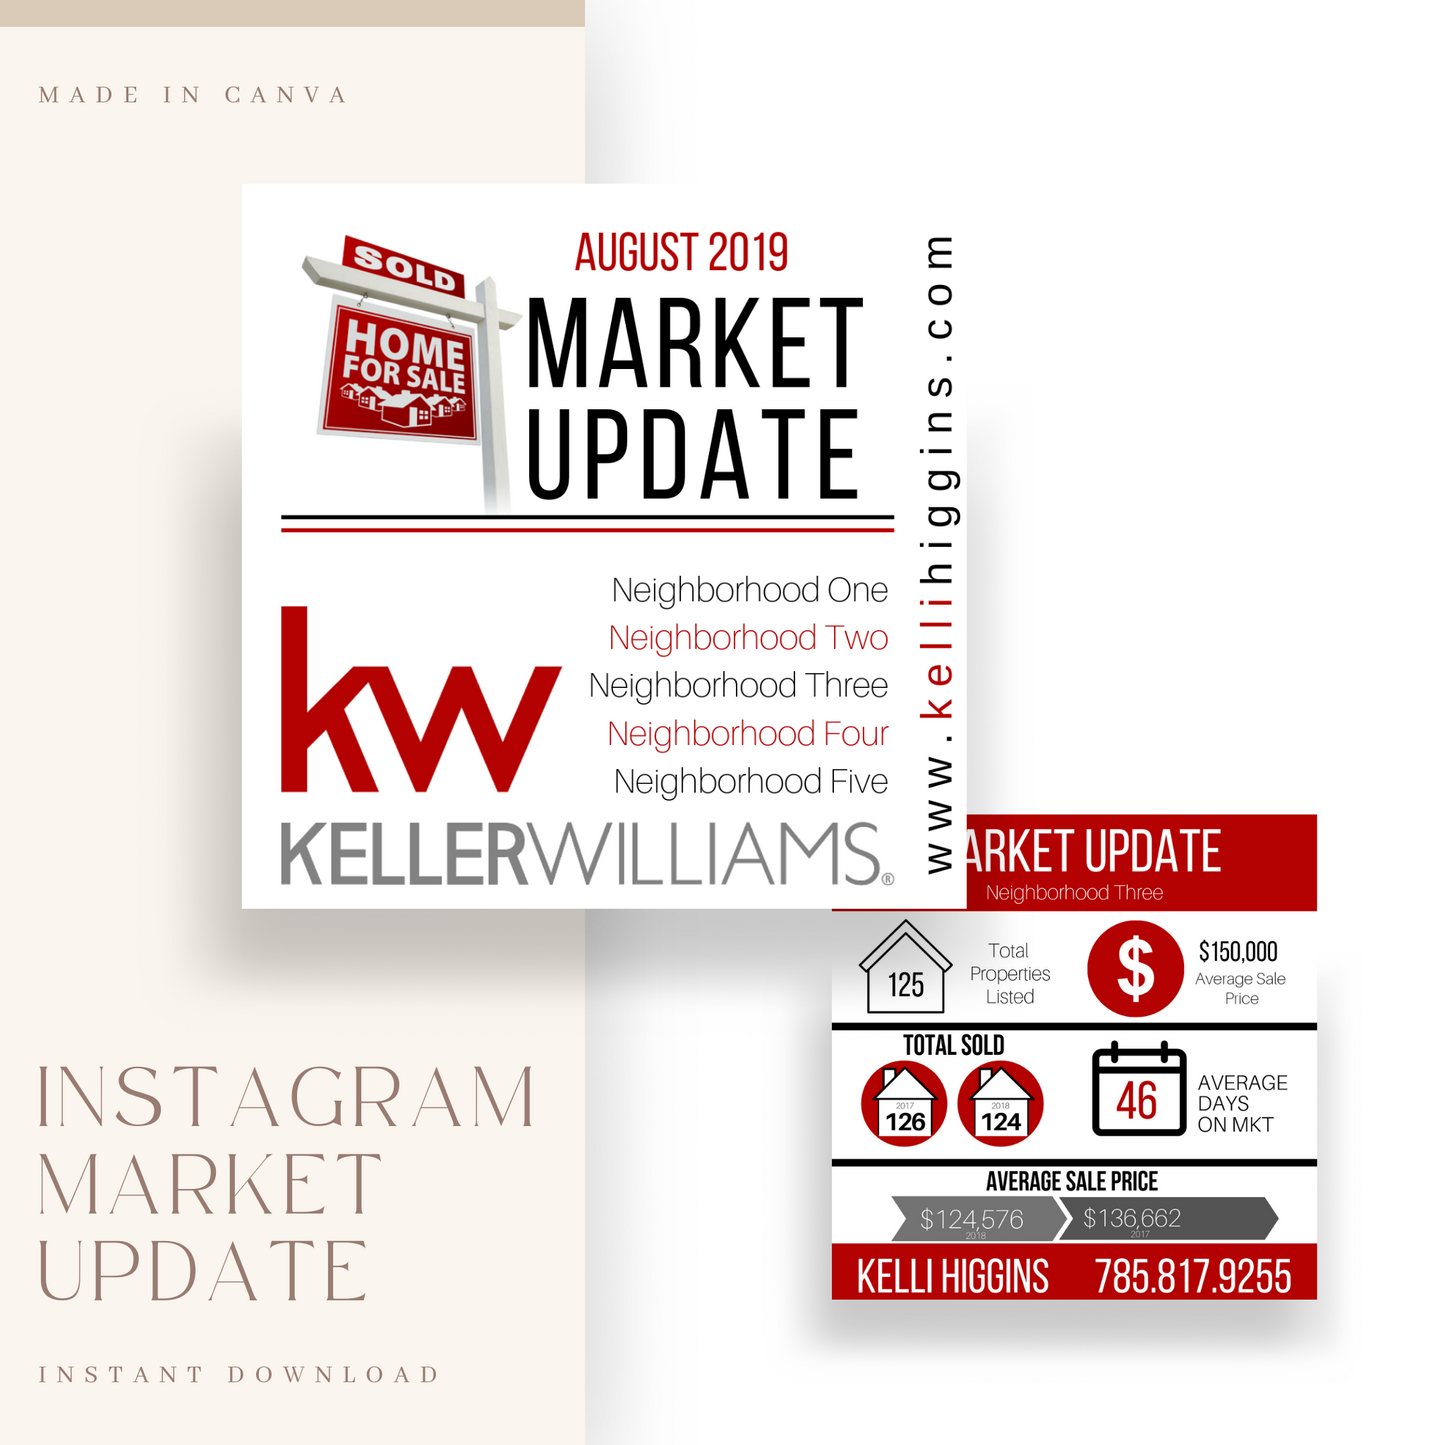 Real Estate Instagram Housing Update Post